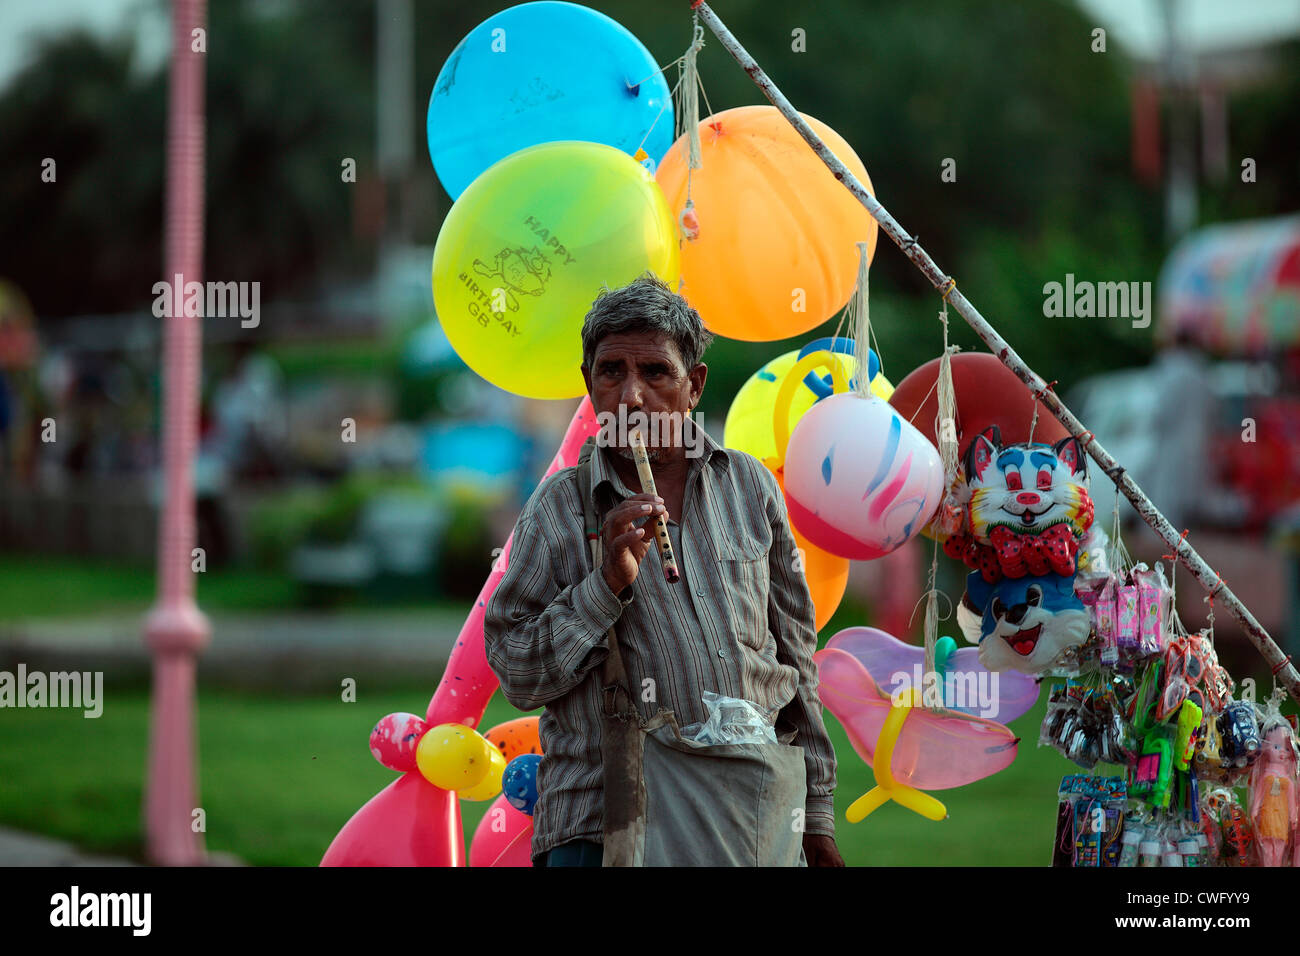 Senior man selling balloons at Market place Stock Photo - Alamy